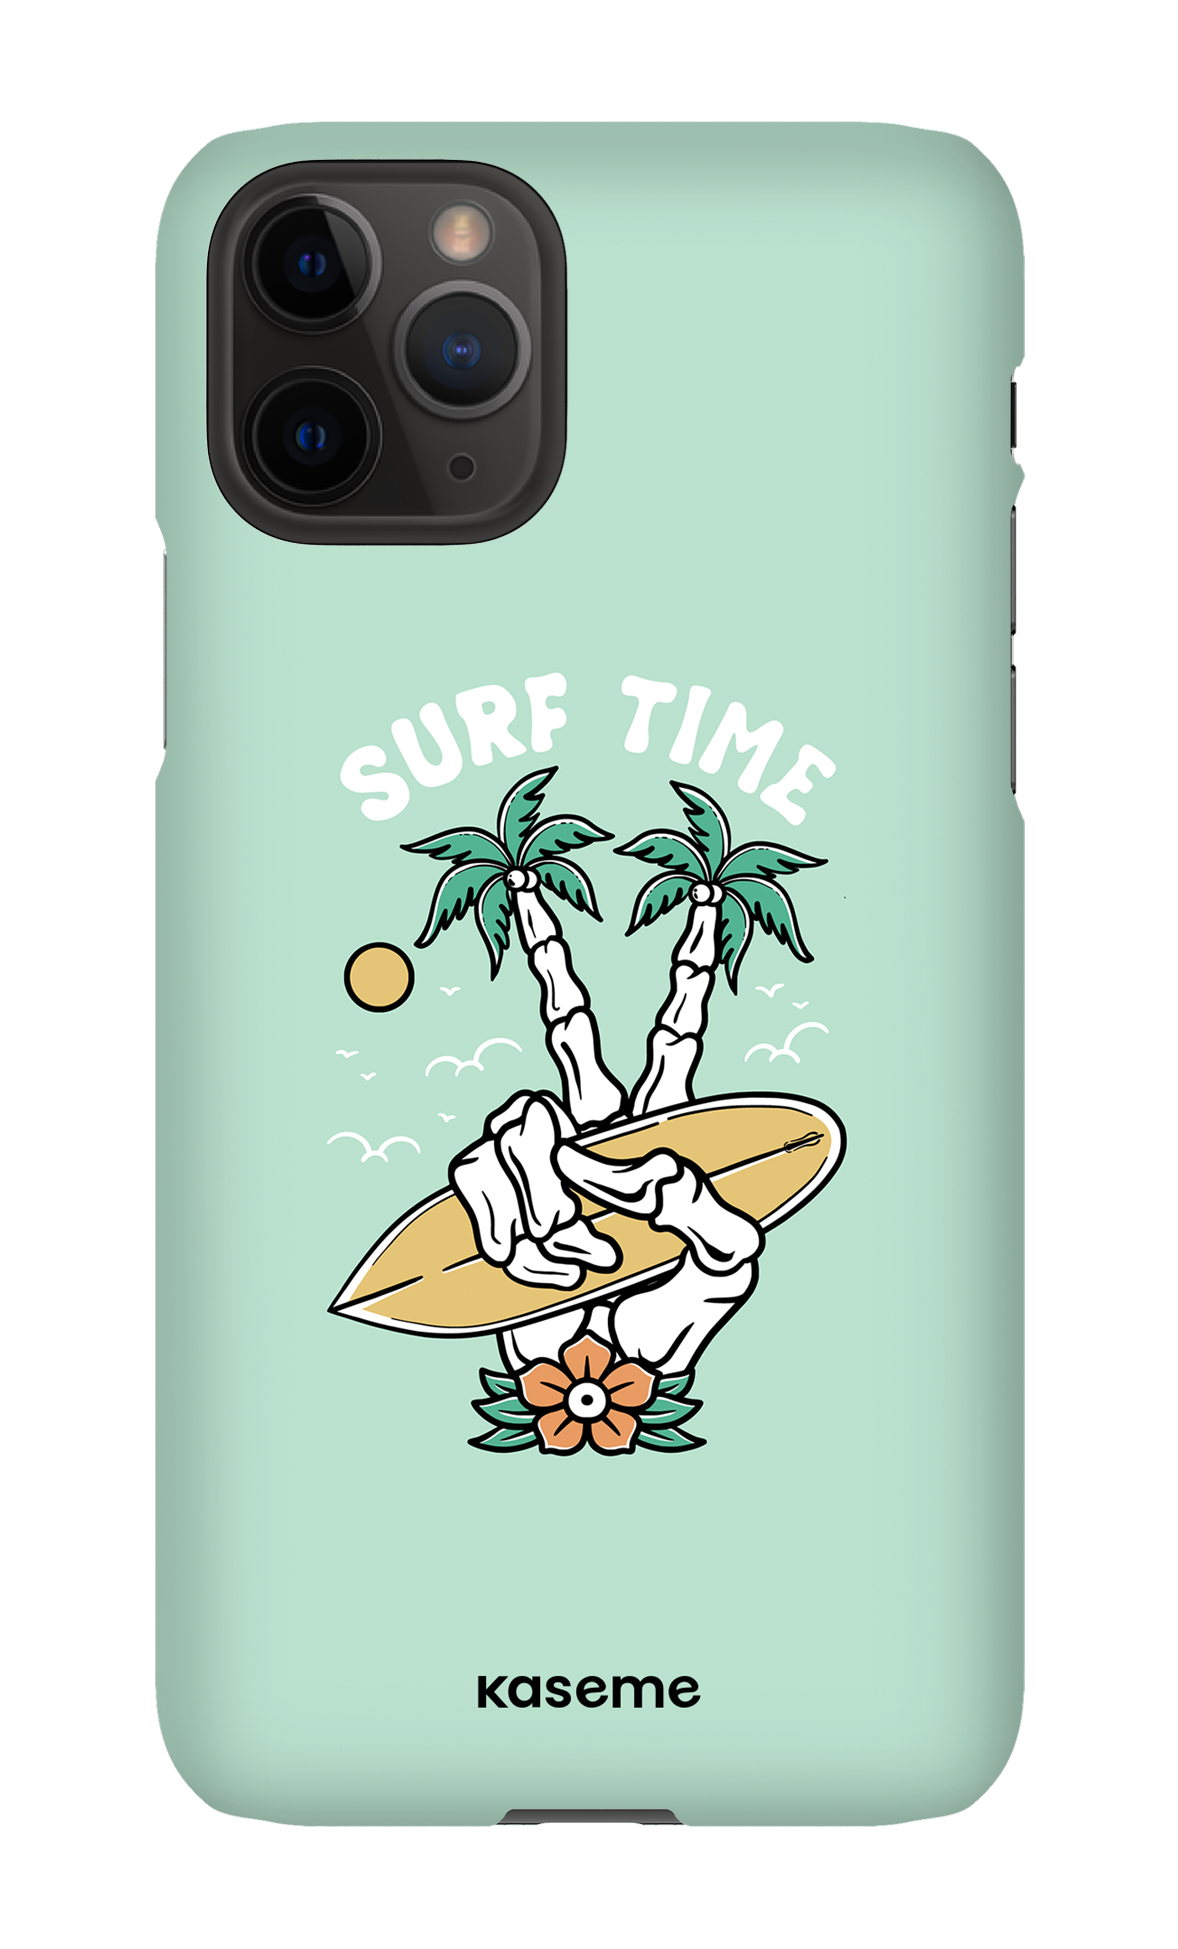 Surfboard - iPhone 11 Pro